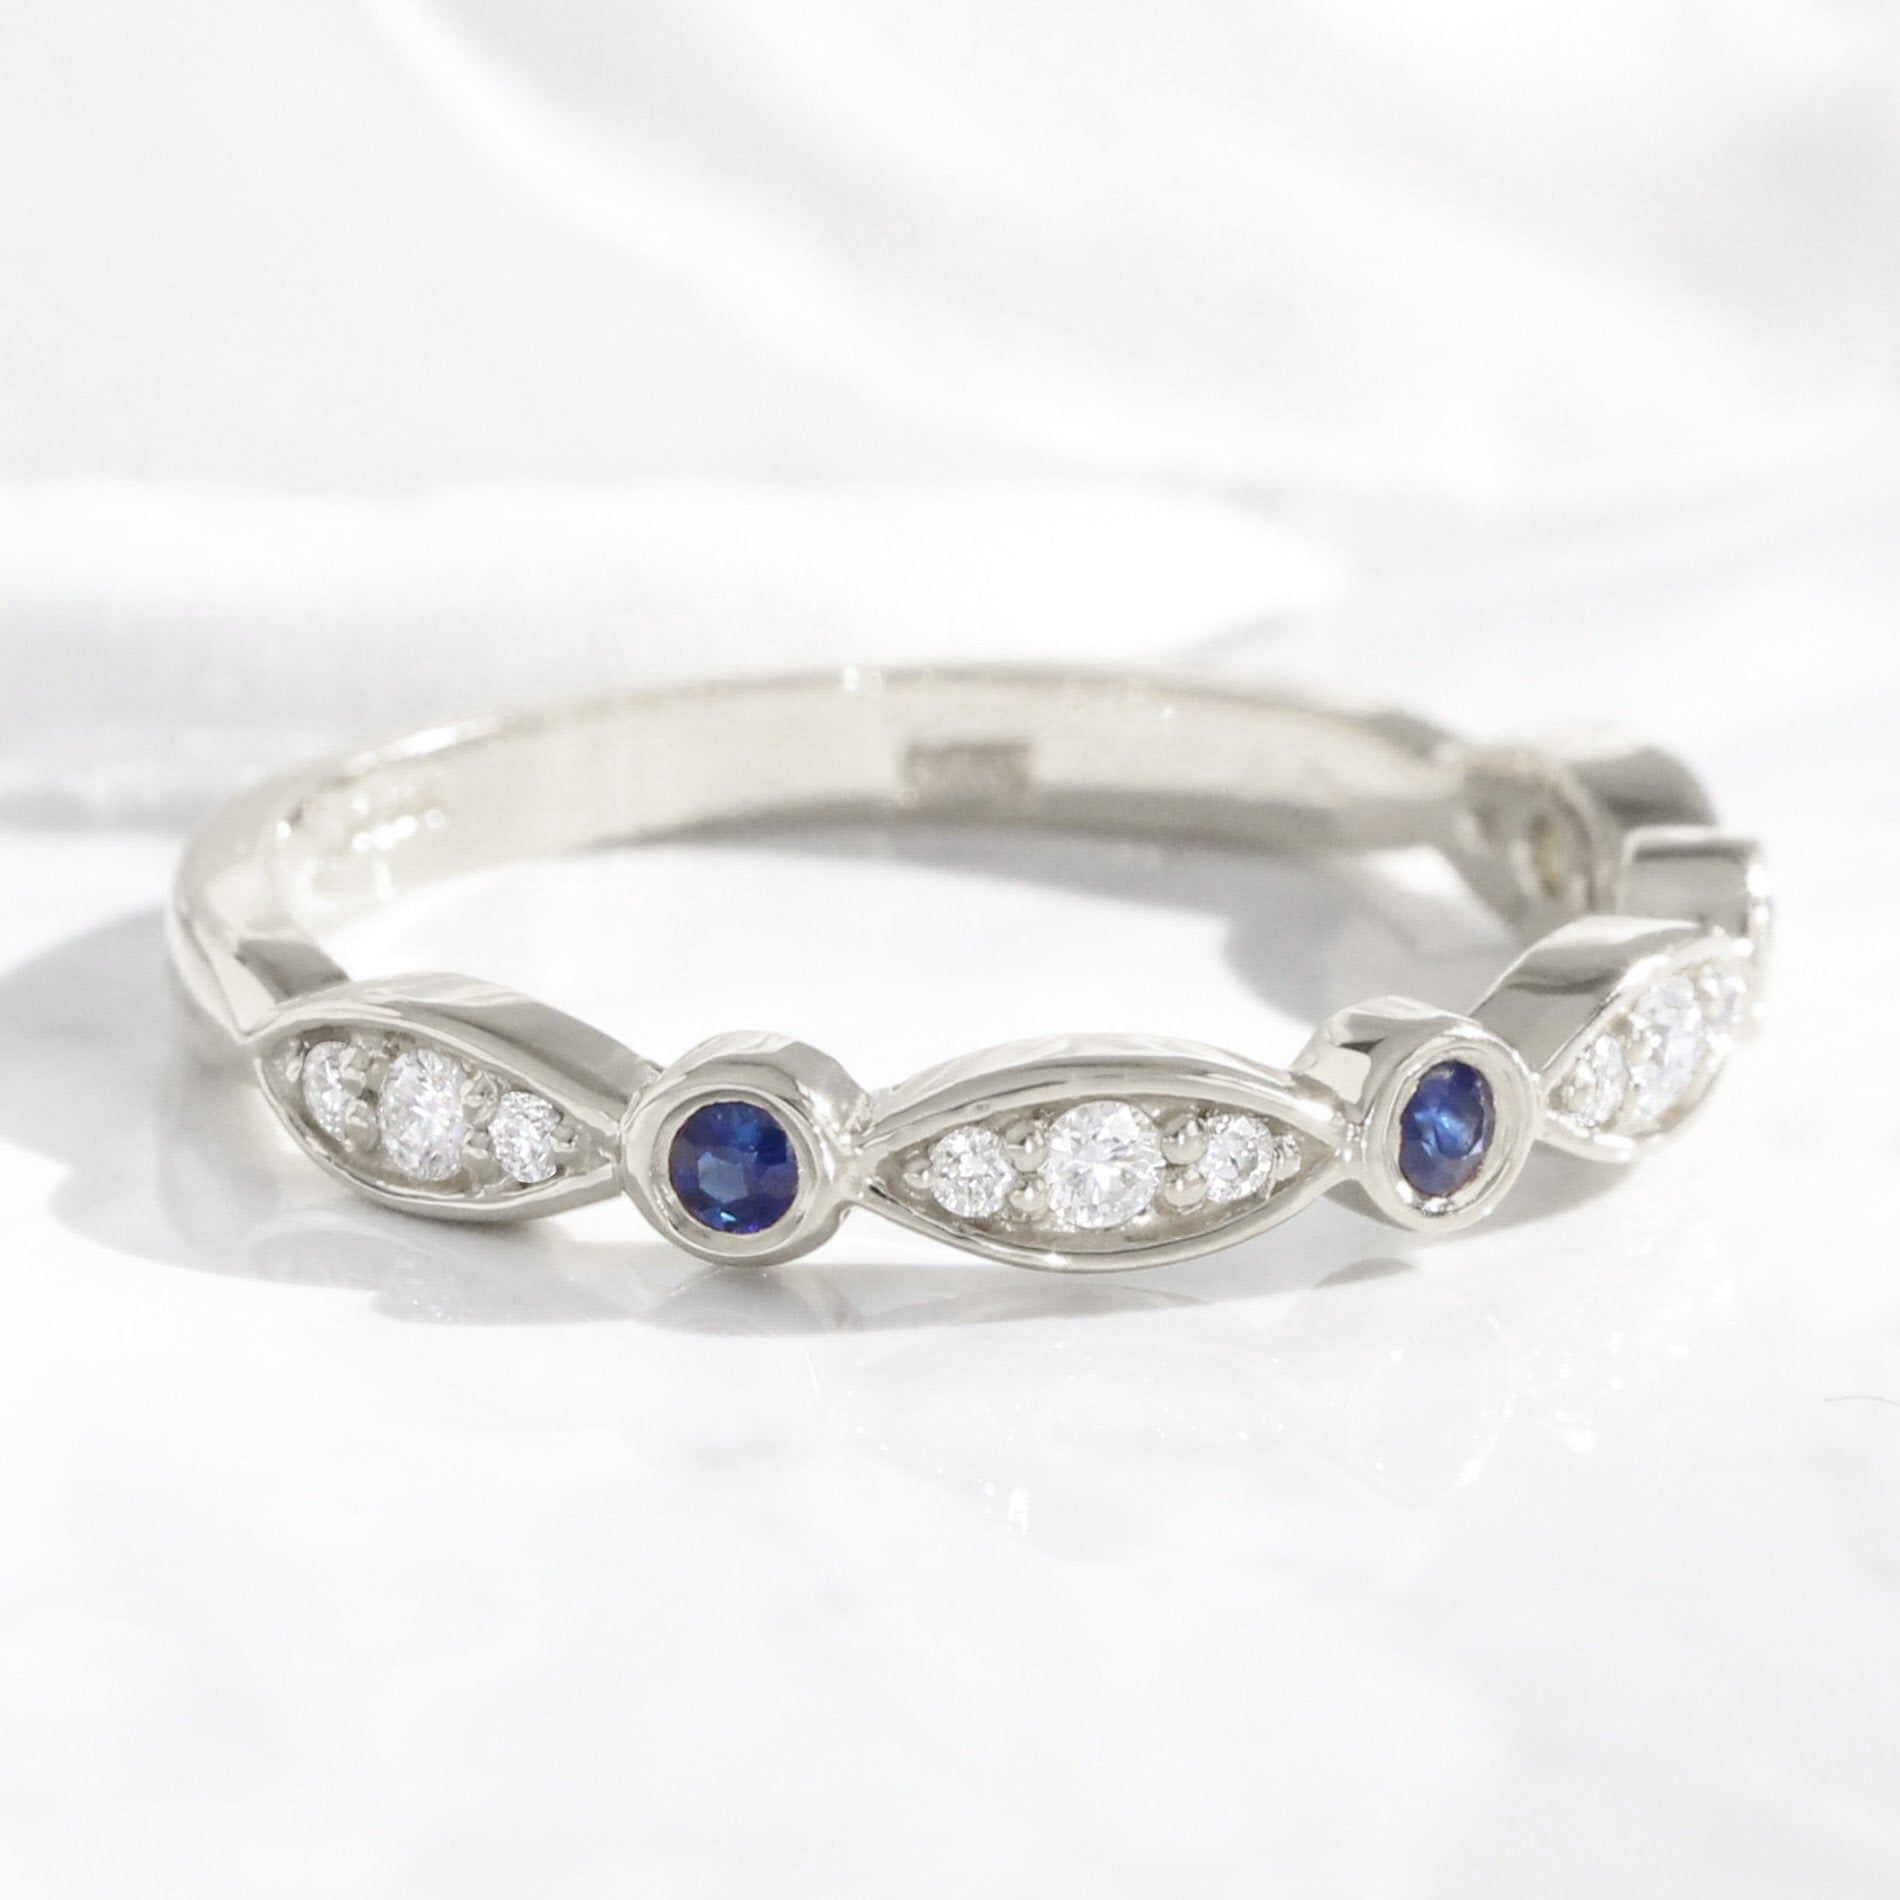 Bezel diamond and sapphire wedding ring white gold scalloped half eternity band la more design jewelry